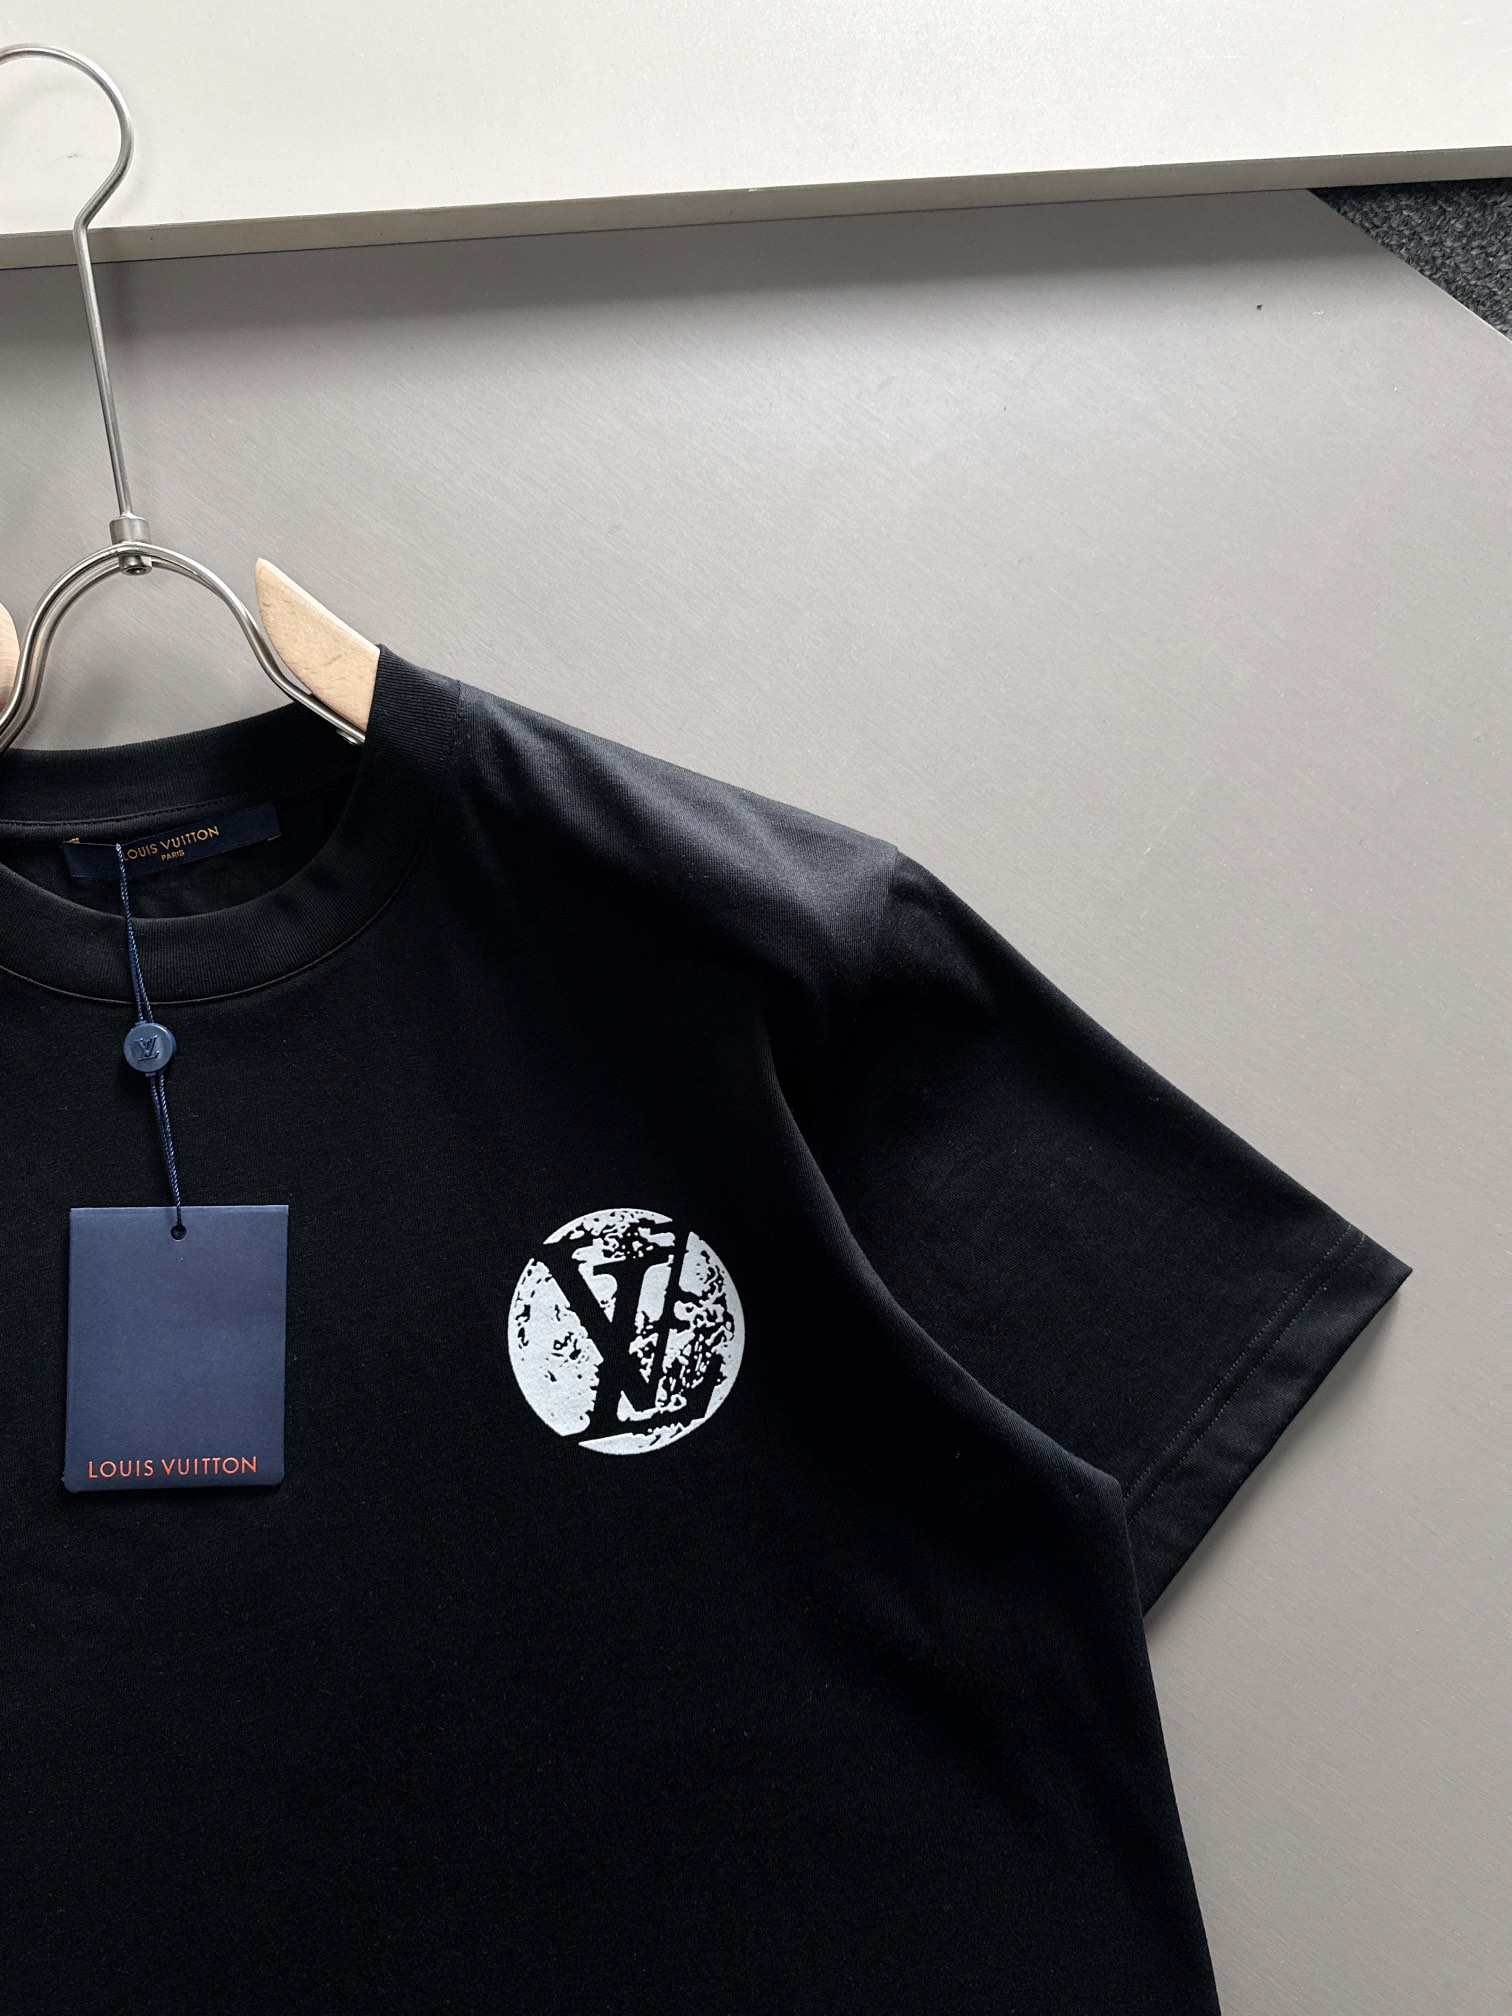 LV2024Ss最新款短袖T恤原标定制面料手感柔软穿着舒适做工精细.上身效果无敌帅气码数S-2xl